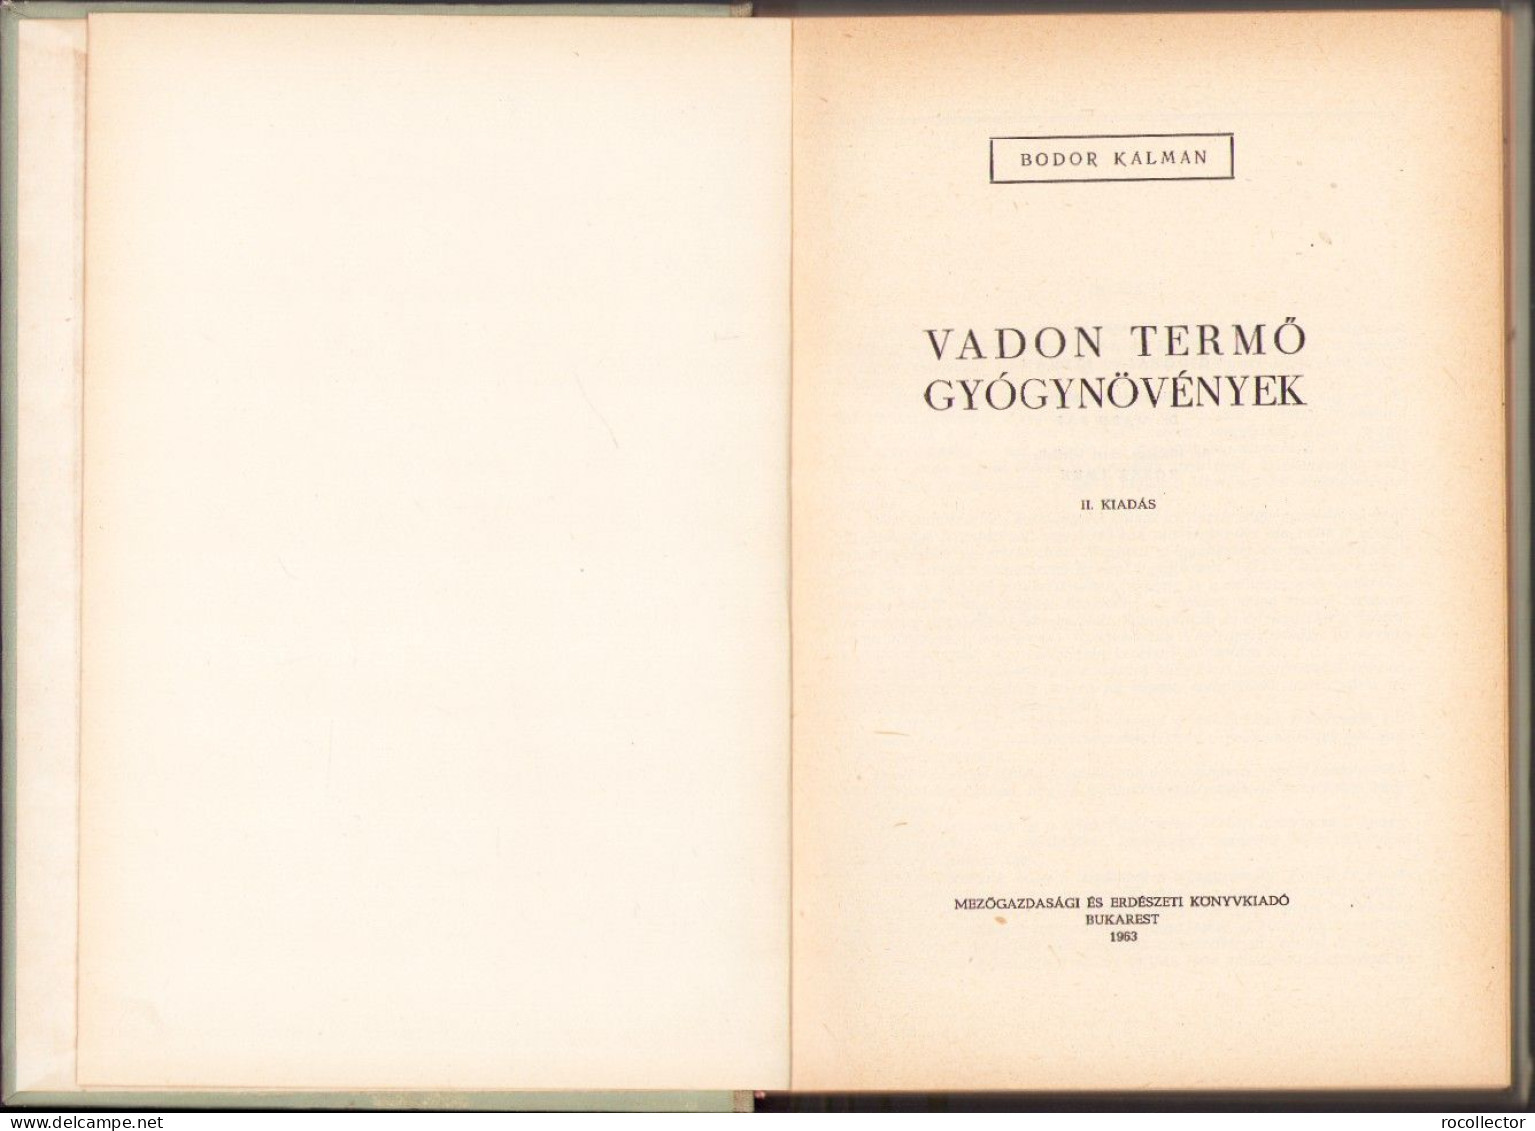 Vadon Termő Gyógynövének Irta Bodor Kálmán, 1963 C4223N - Old Books